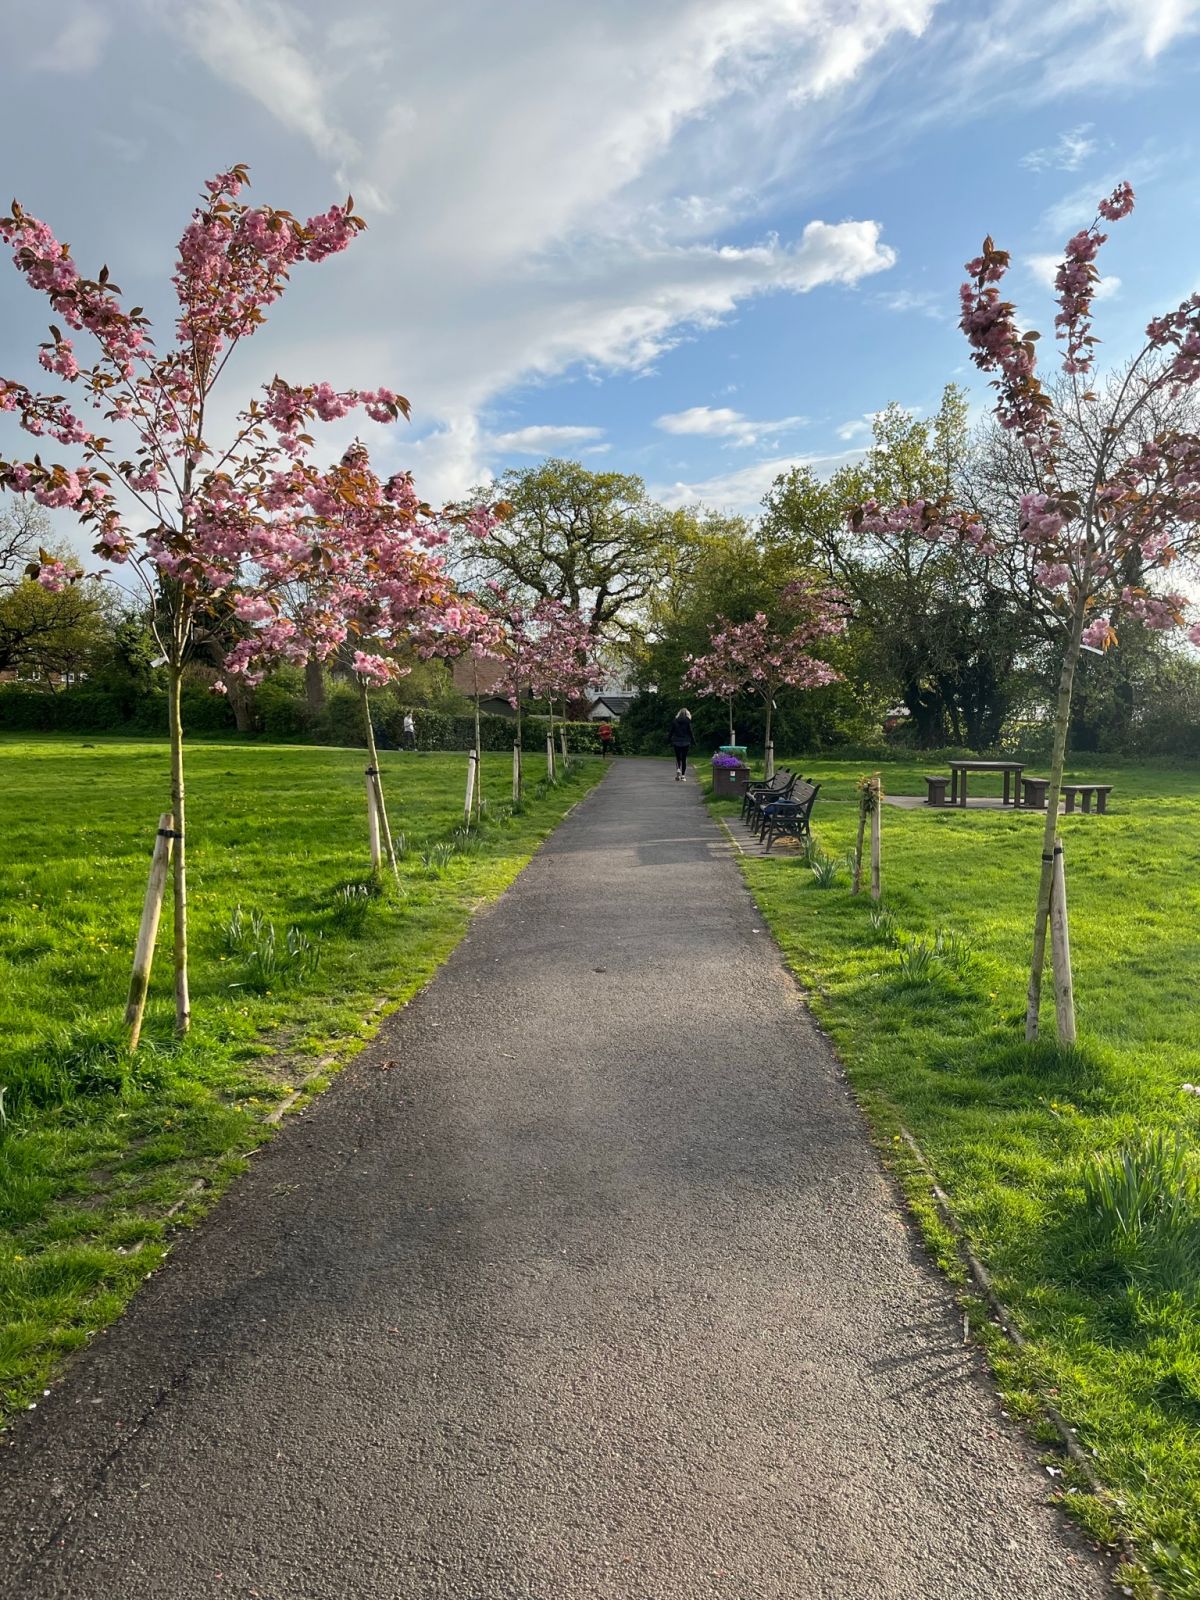 Meriton Park Flowering Cherry Trees - 